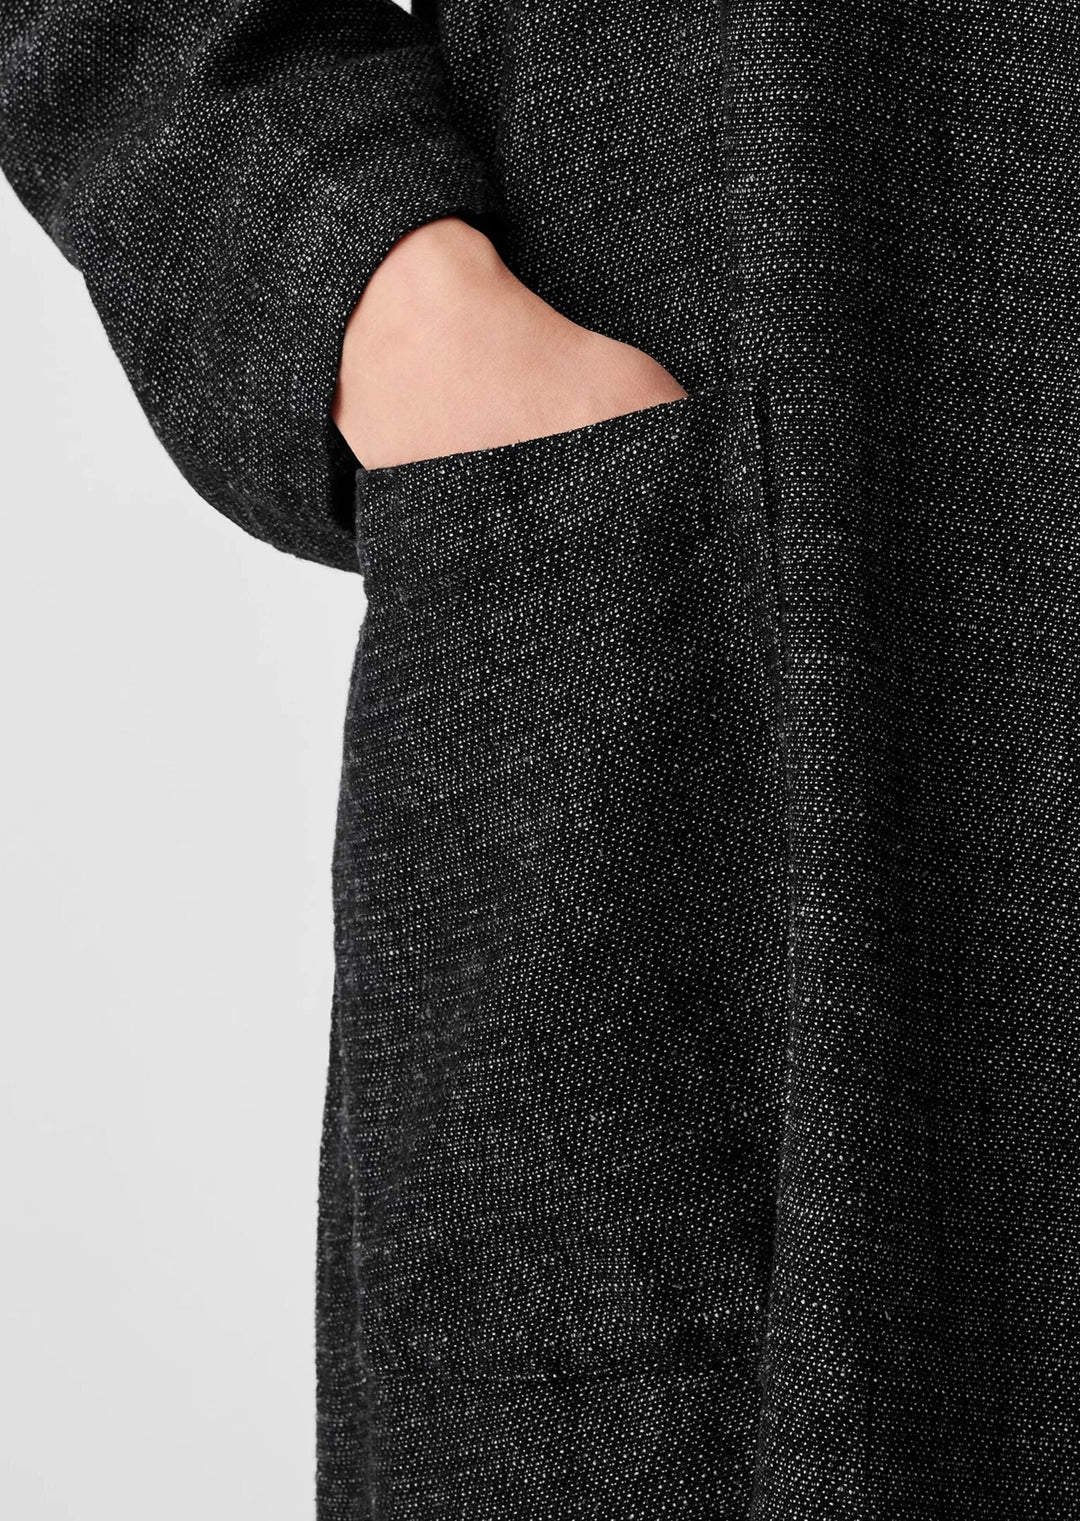 Eileen Fisher - Tweedy Hemp Cotton High Collar Coat